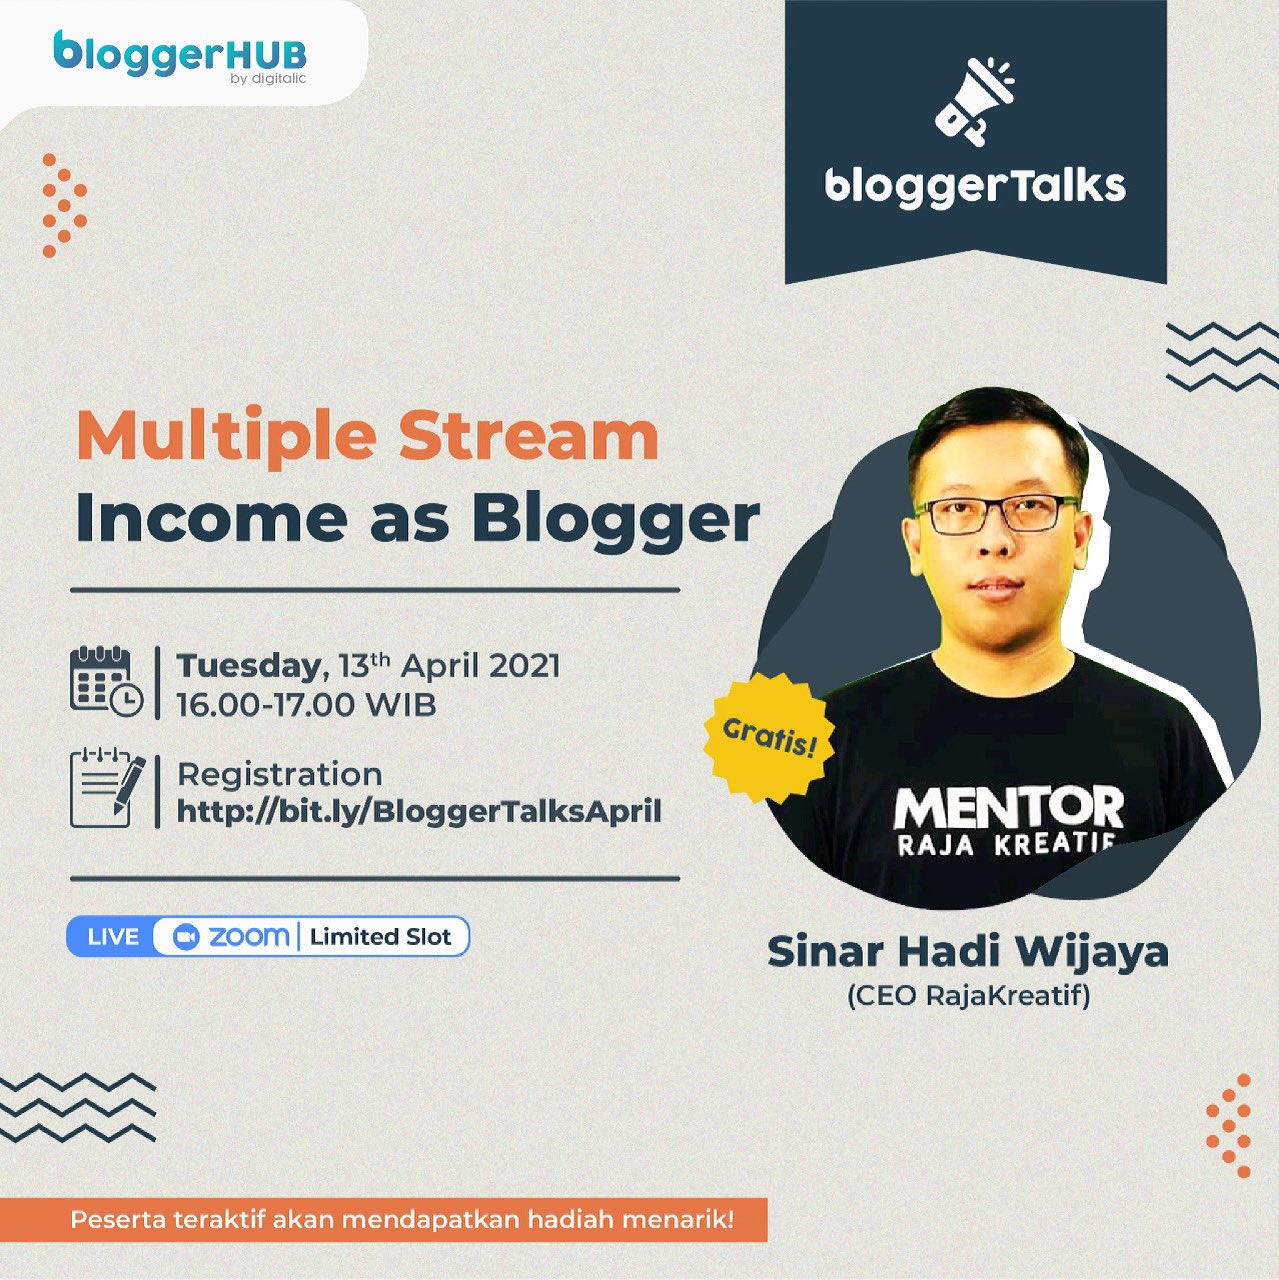 bloggerhub Multiple Stream Income as Blogger